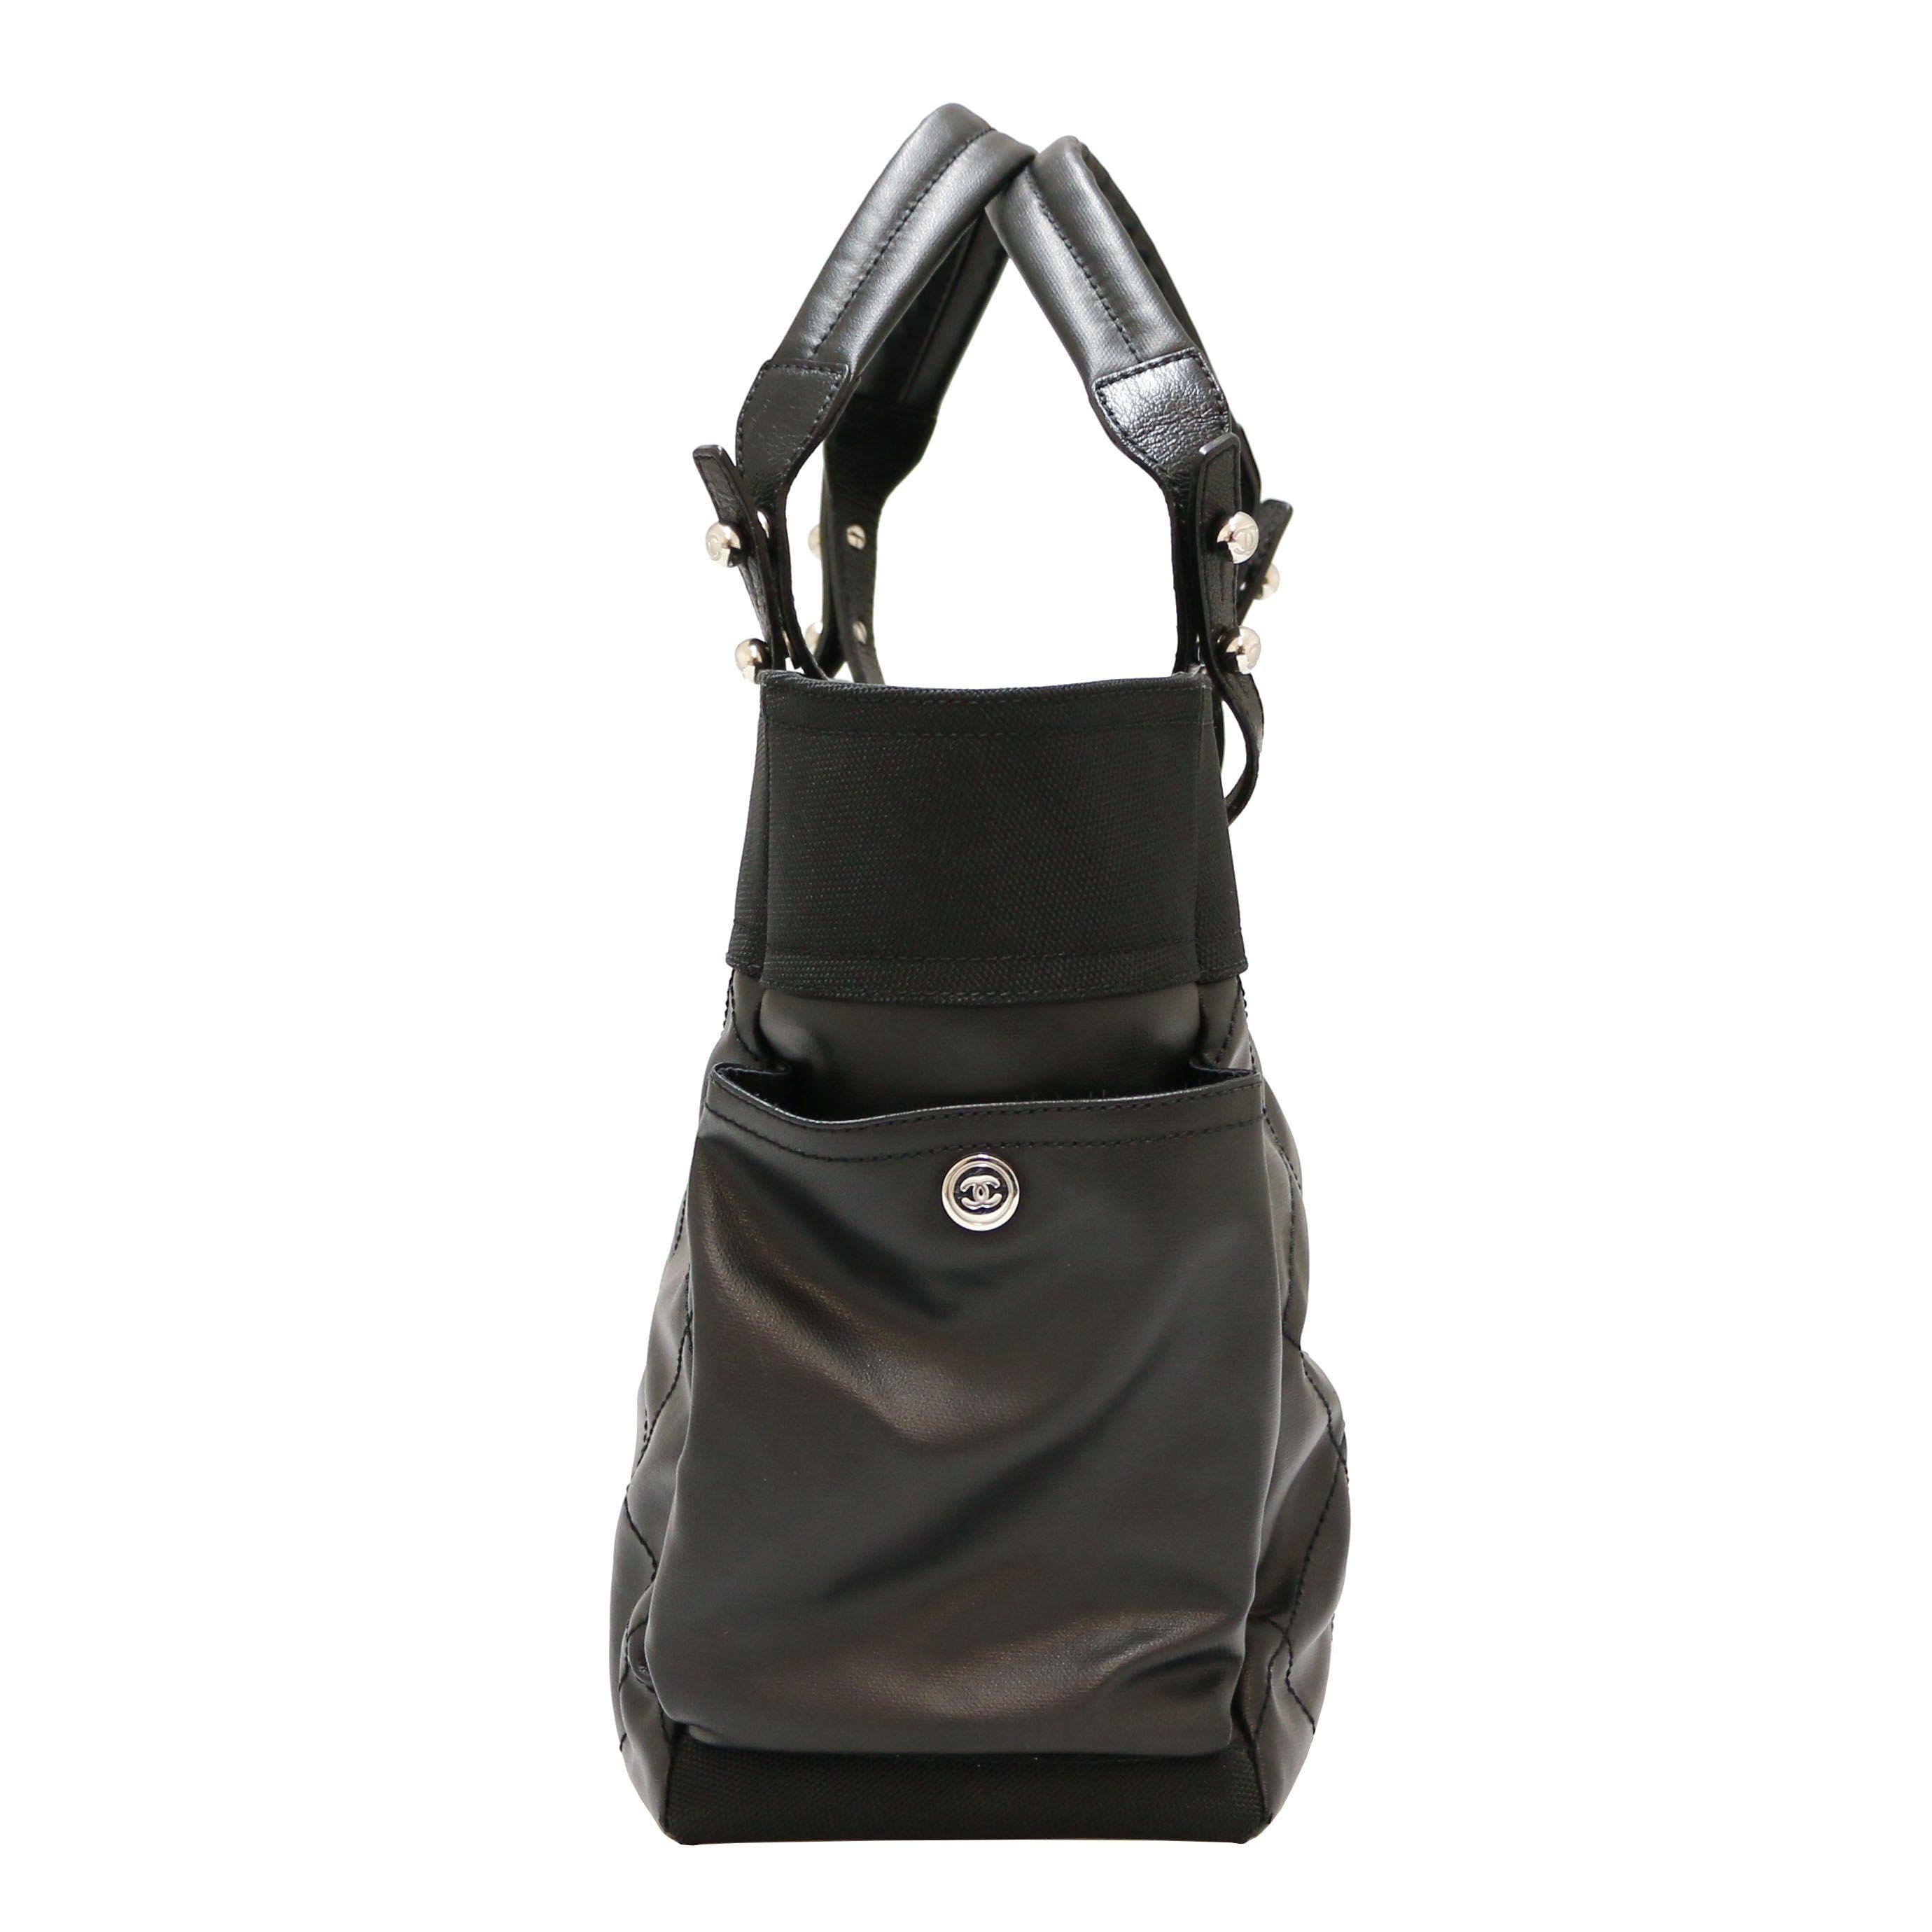 Chanel black tote bag For Sale 1